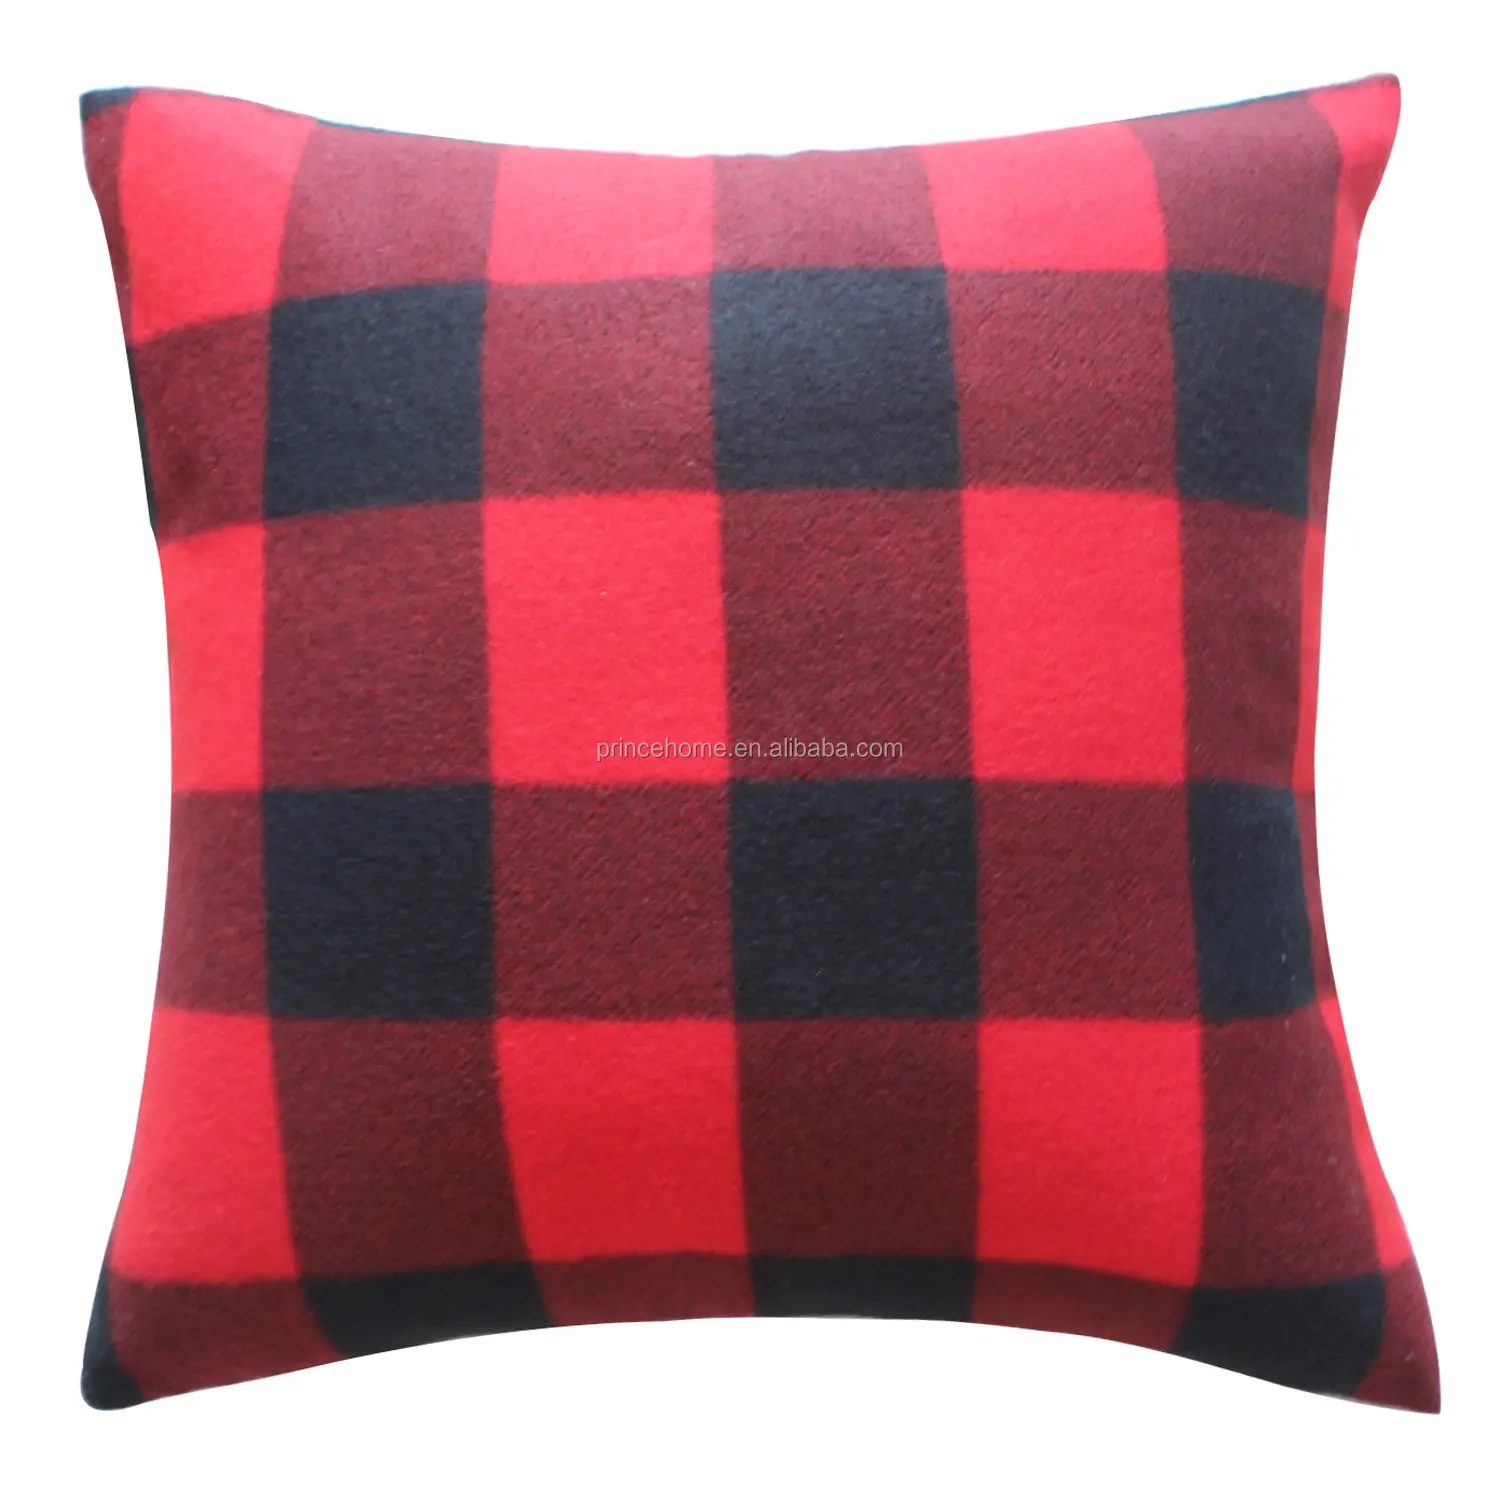 Red and black Fashion Lattice Plaid Cushion Cover for Sofa Bed Home Decor Printed Customized Car Cushion